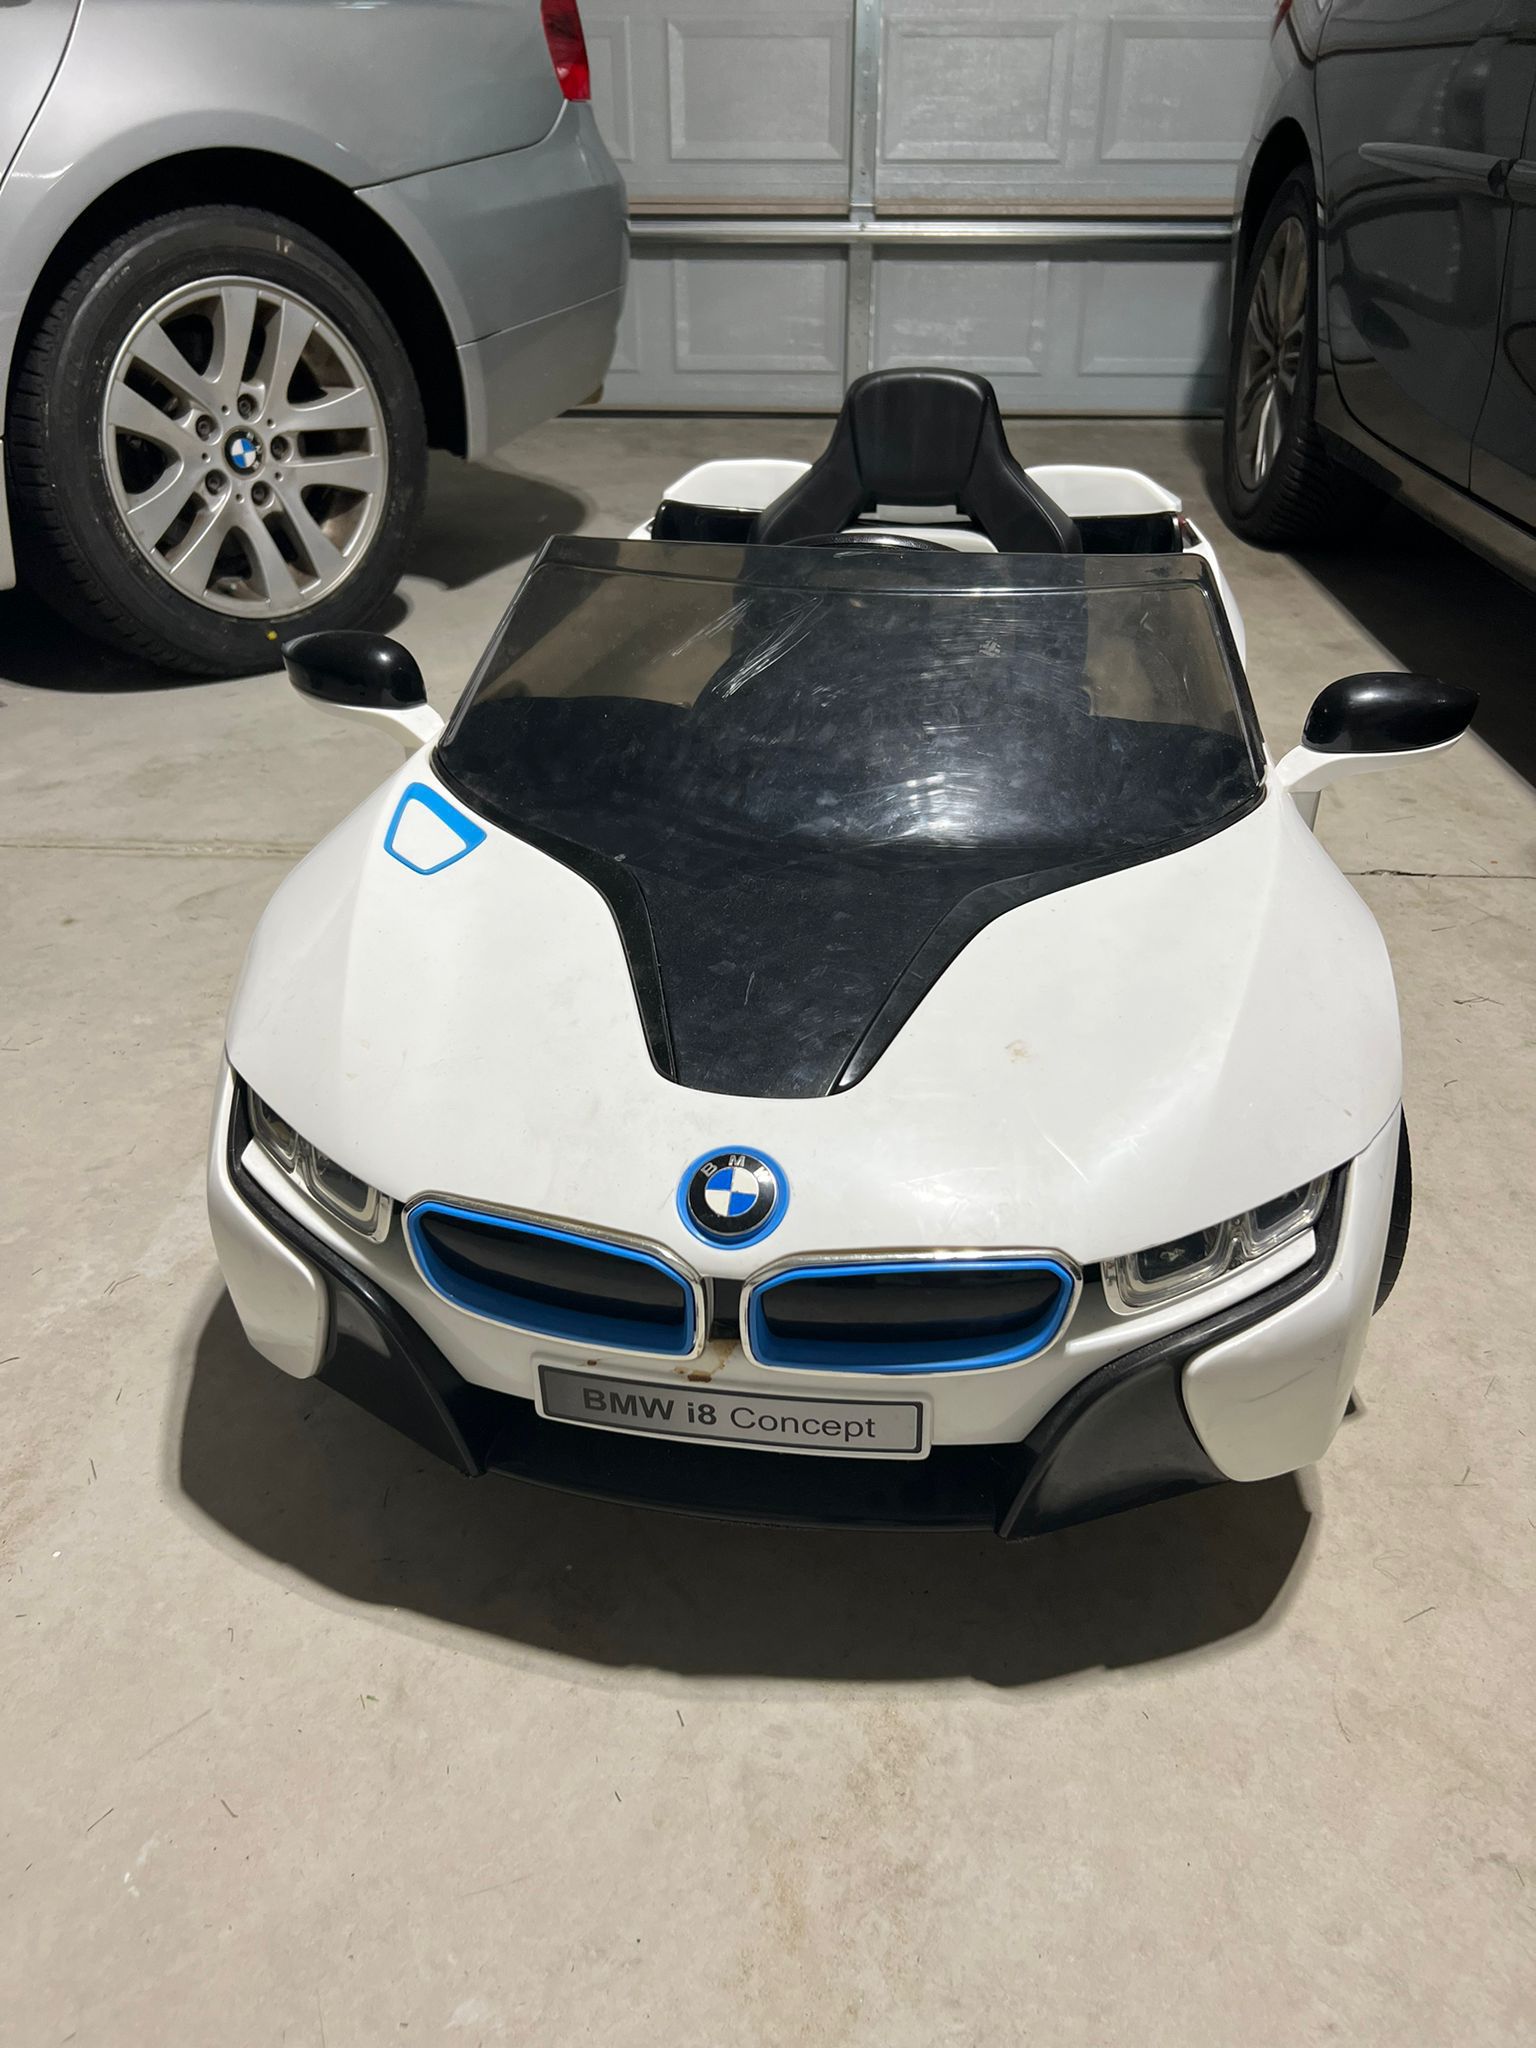 BMW i8 Concept 6V Kids Ride On Electric Car